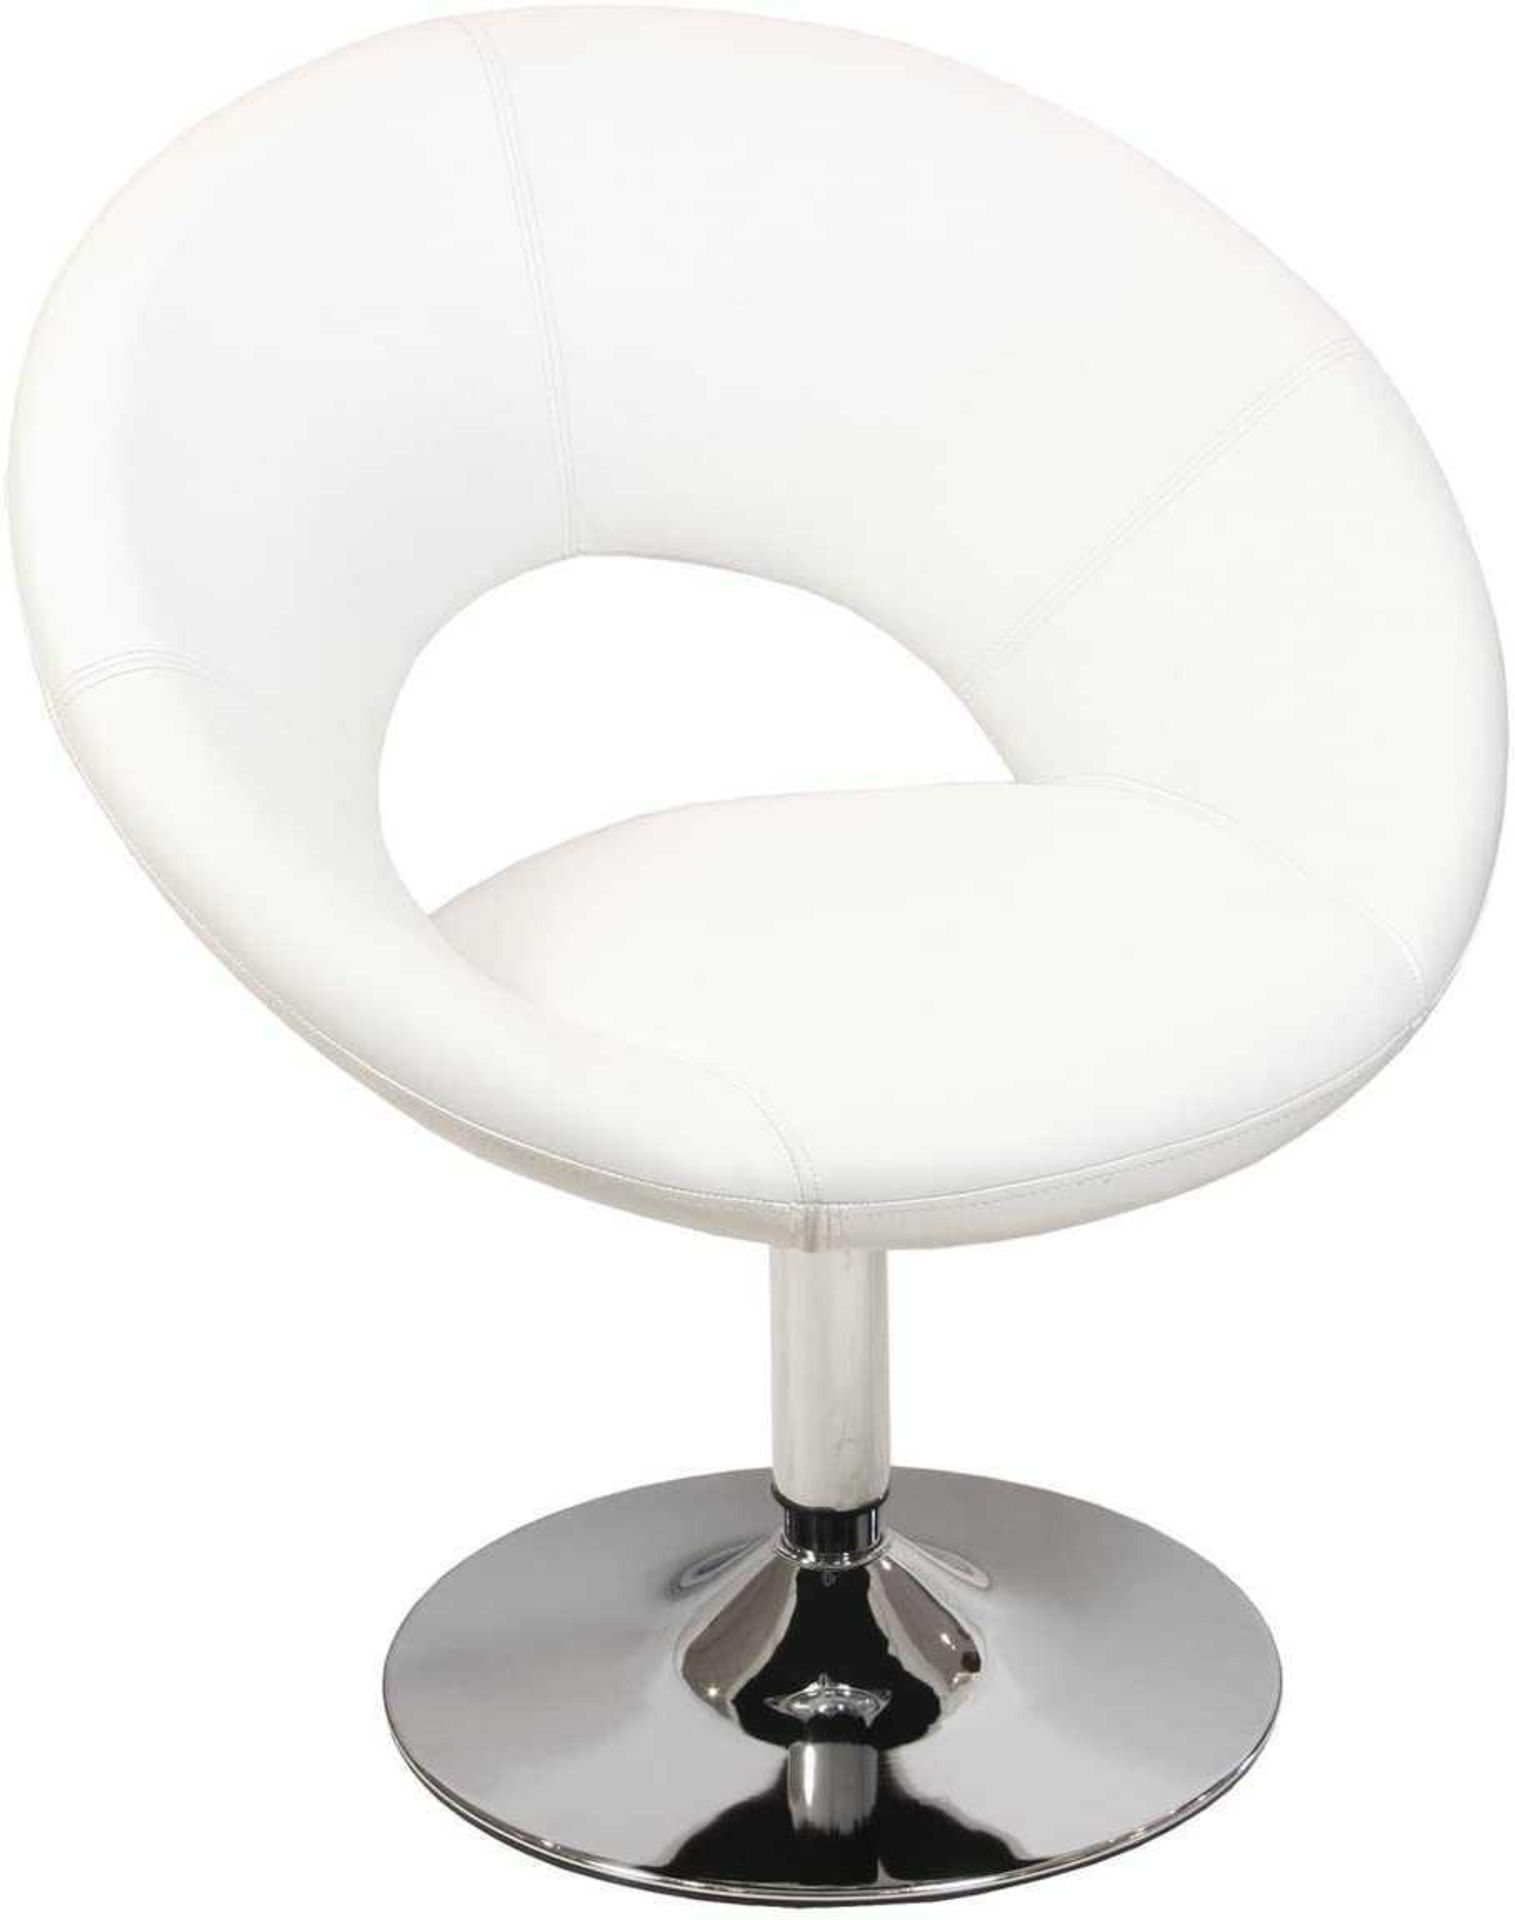 RRP £80 Boxed Febland Swivel Tub Chair White Faux Leather, 80 X 42 X 74 Cm